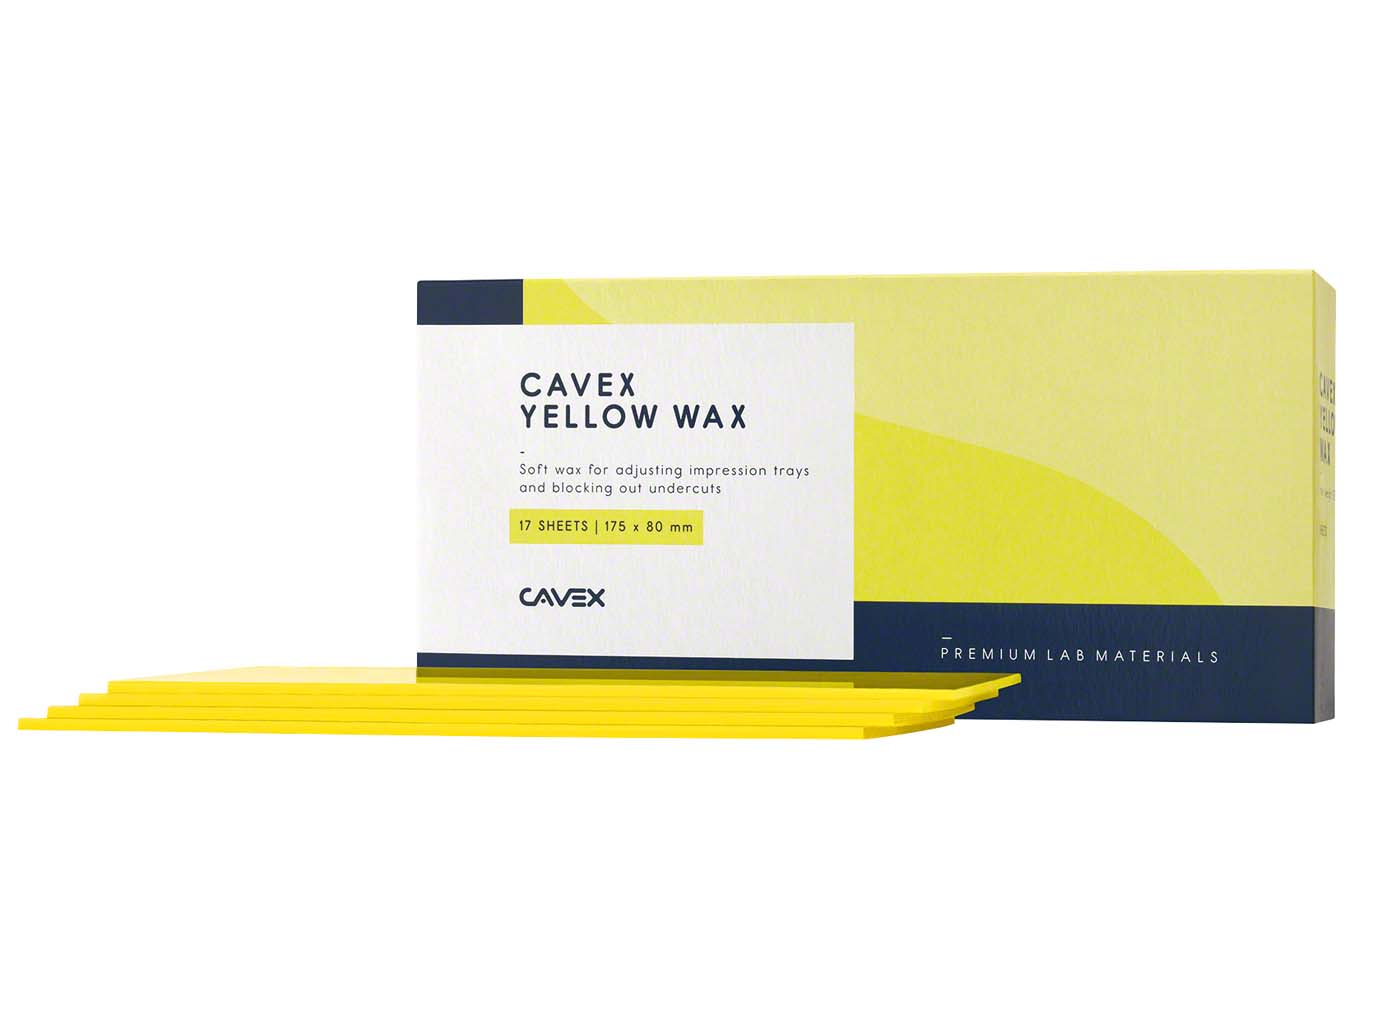 Cavex Yellow Wax Cavex